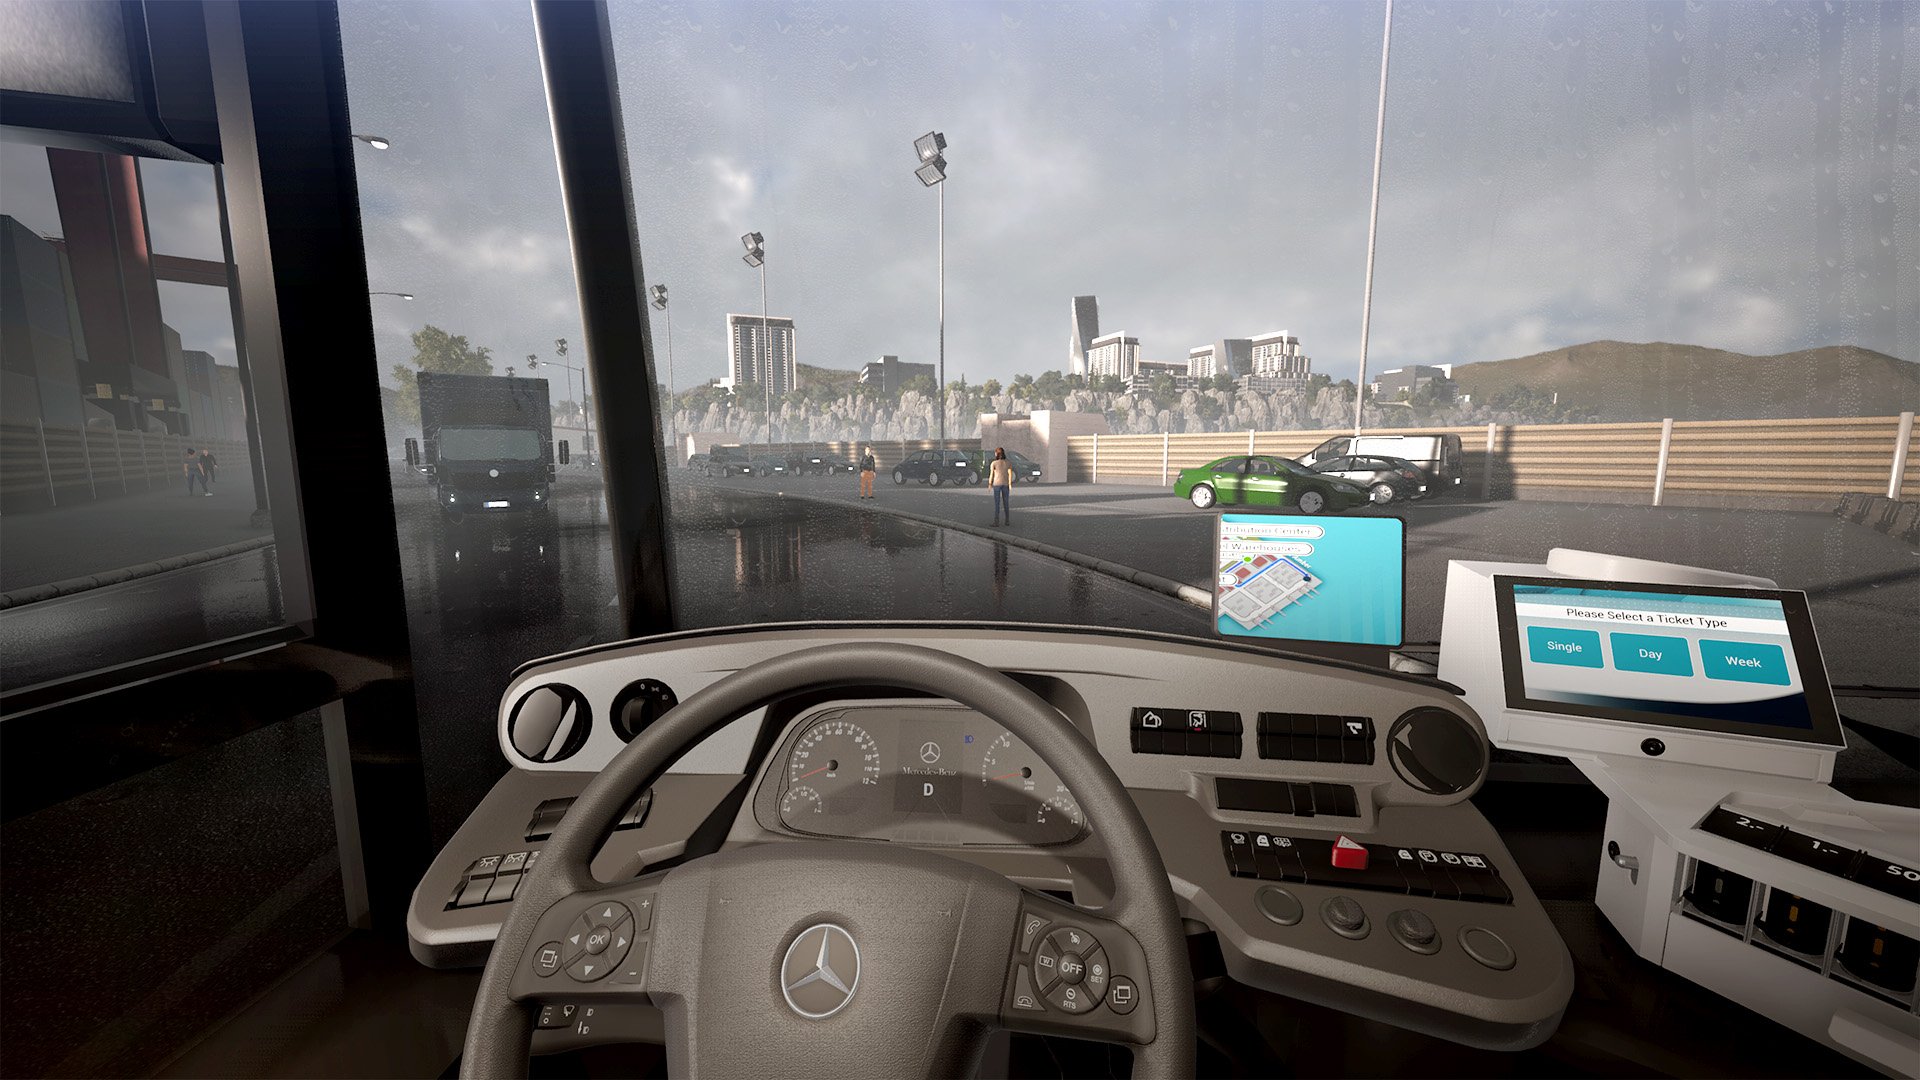 Bus Simulator (PS4) Video Game Review